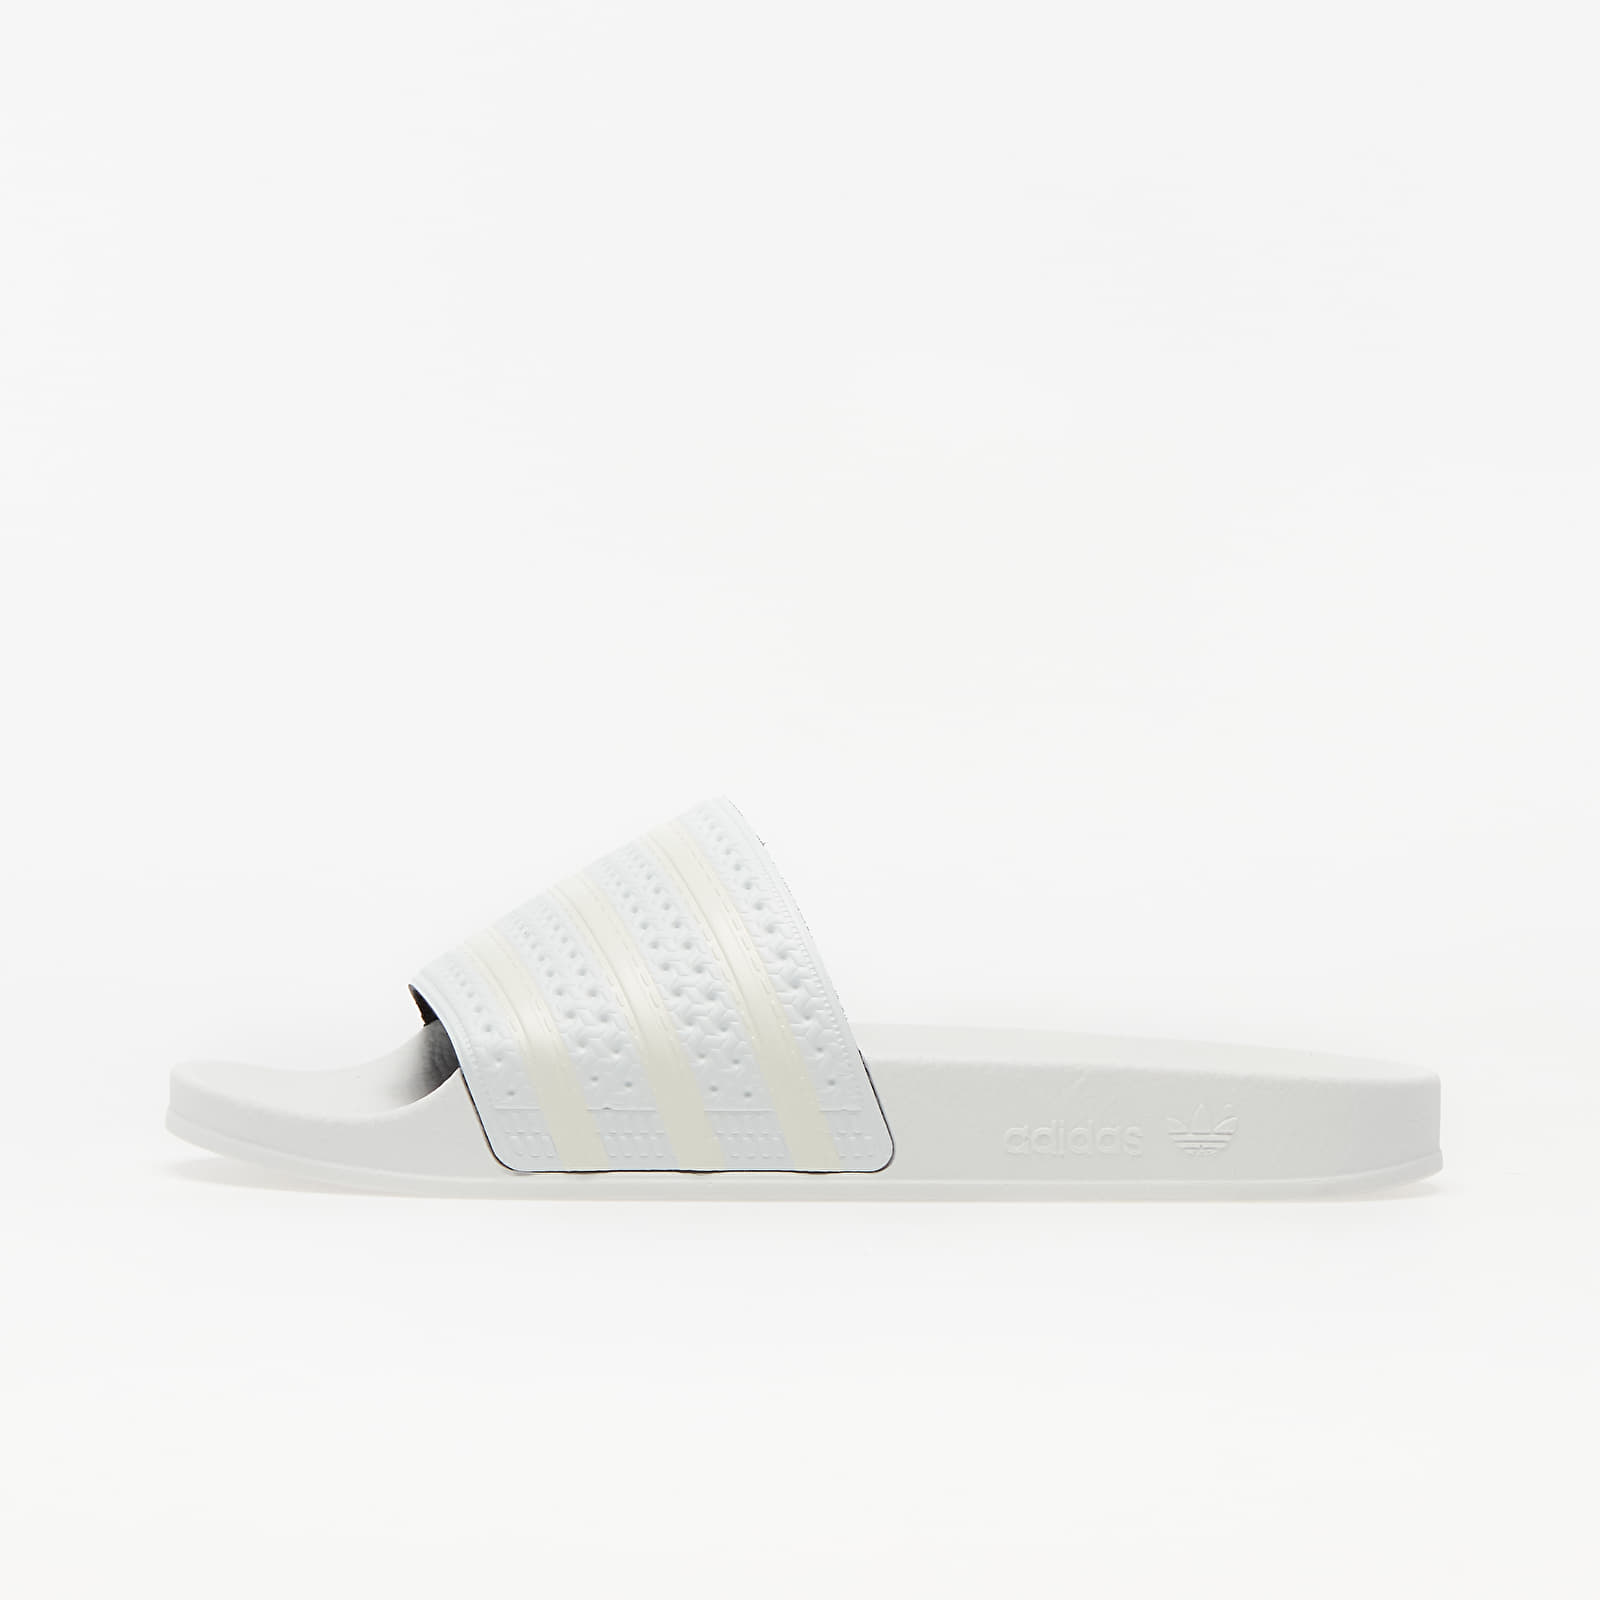 Chaussures et baskets femme adidas Adilette W Ftw White/ Off White/ Ftw White